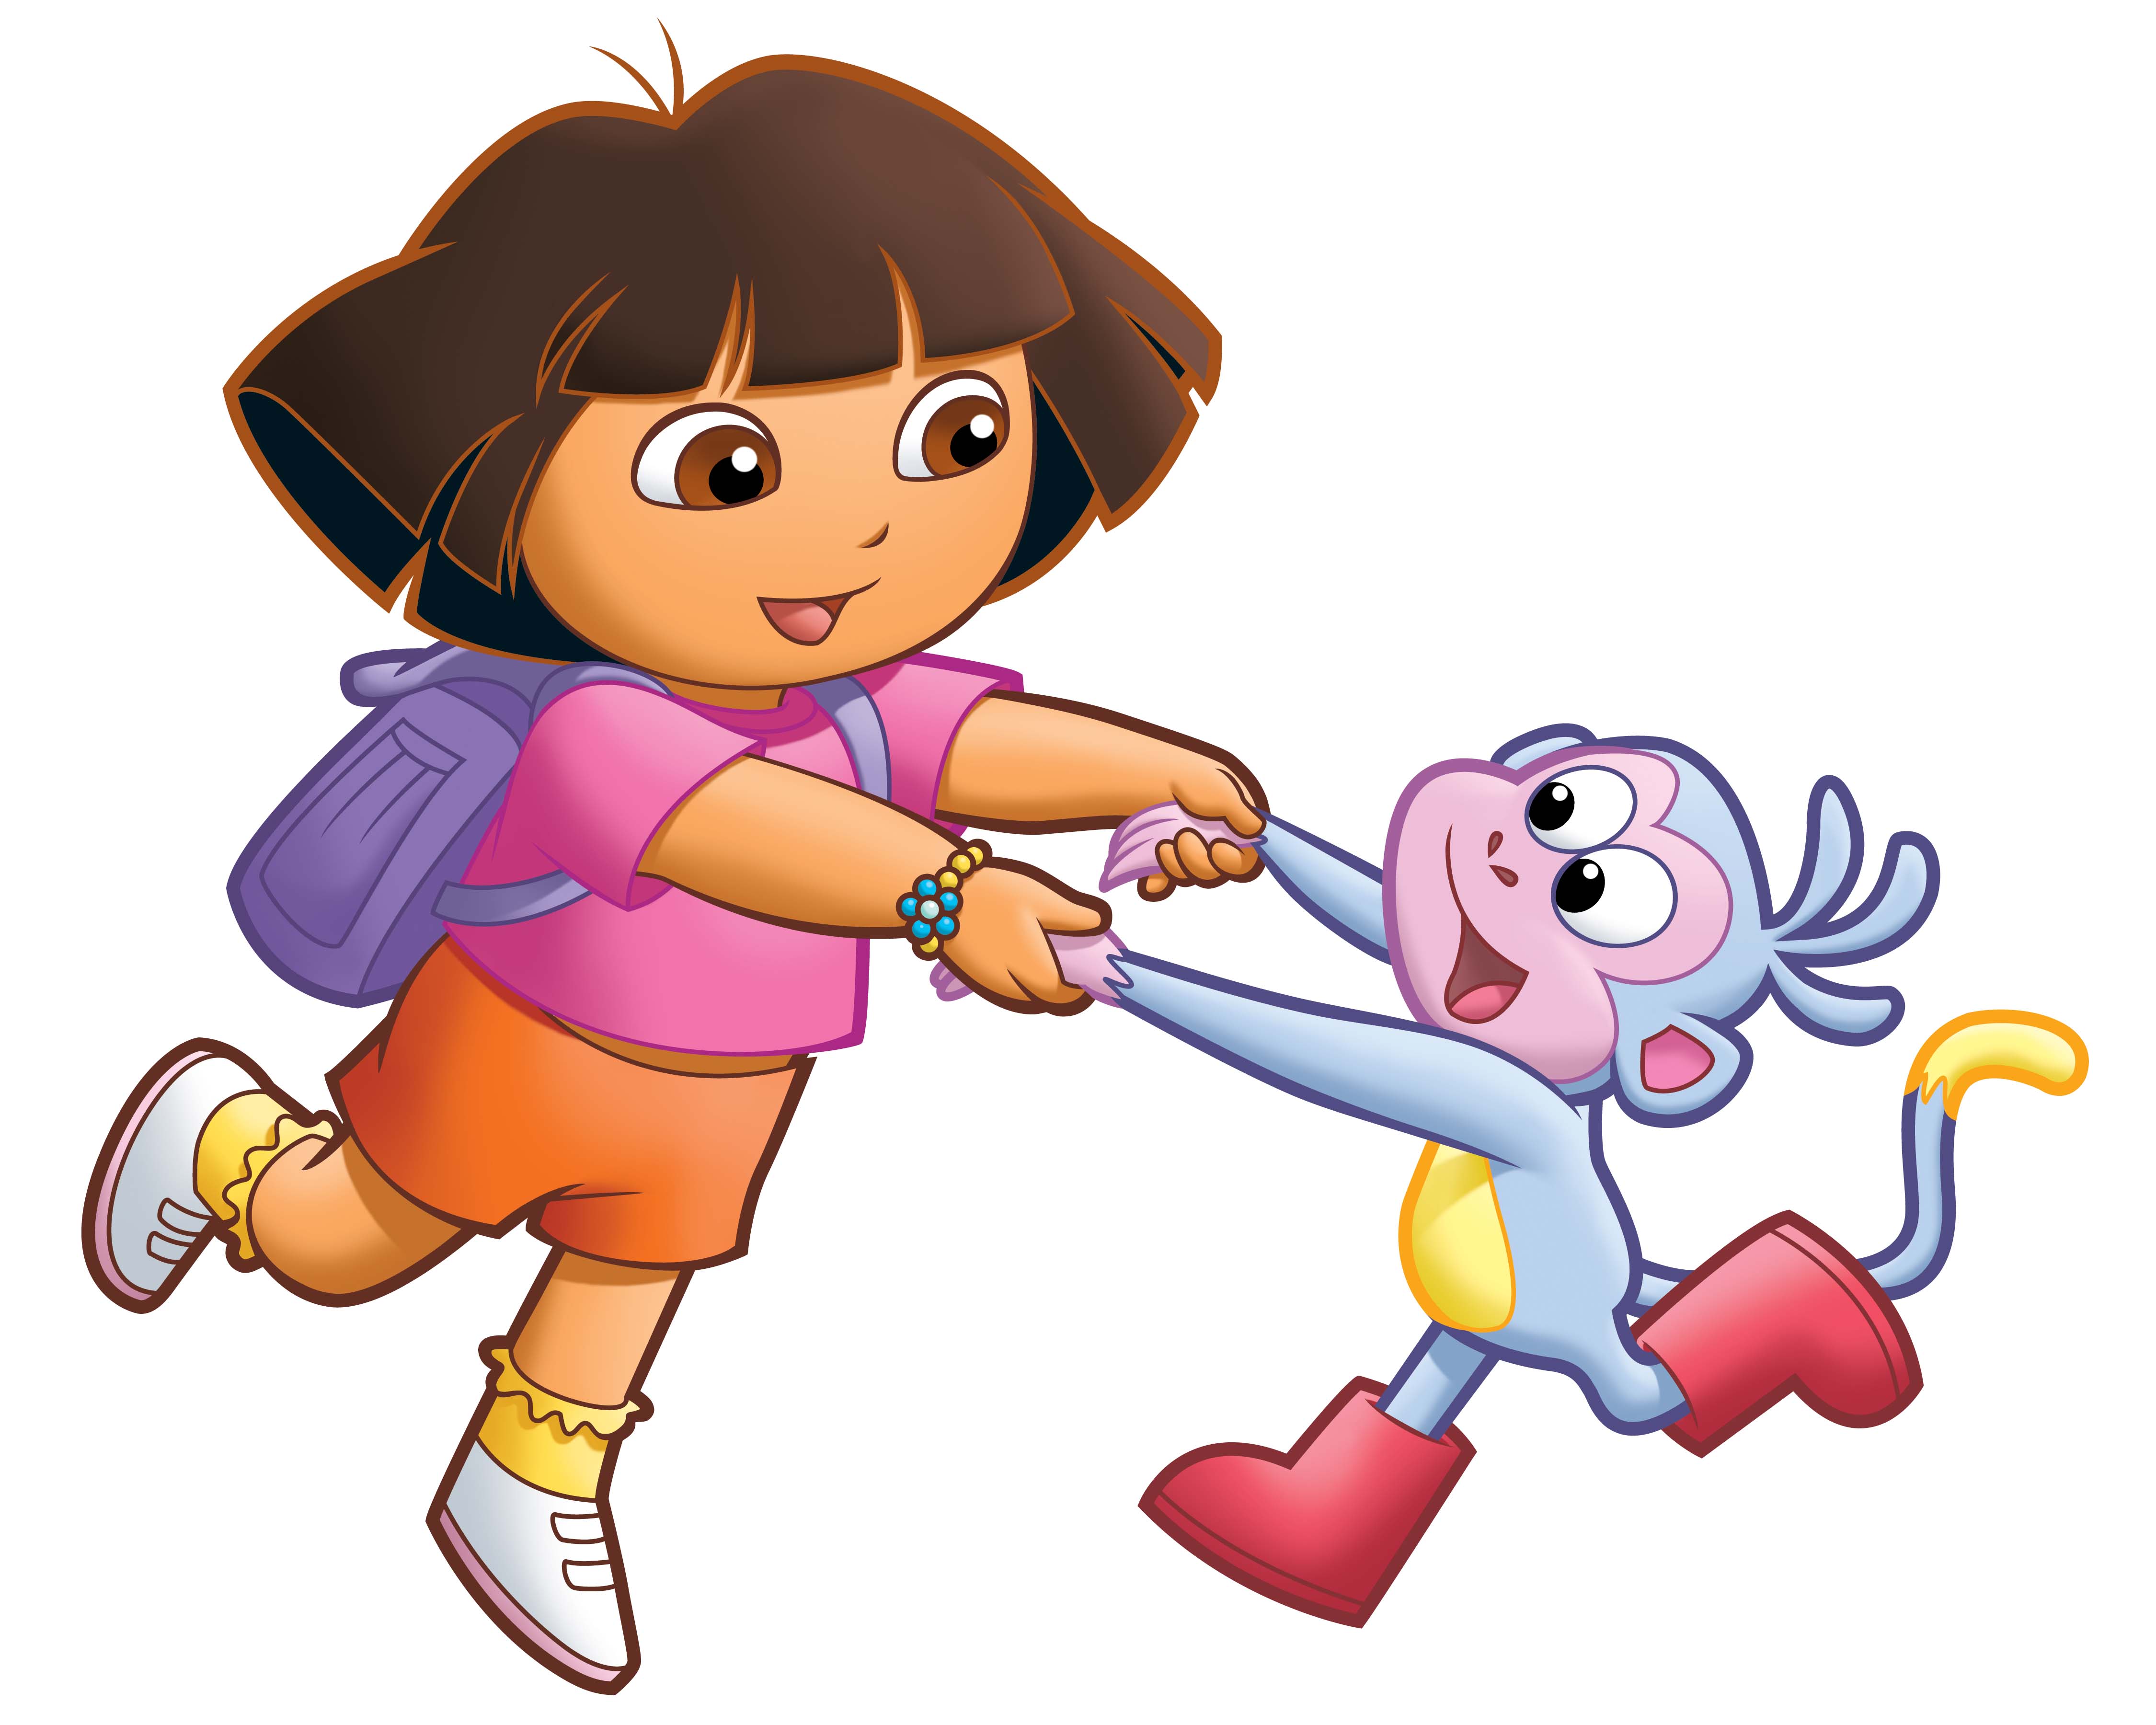 Dora The Explorer wallpaper, Cartoon, HQ Dora The Explorer